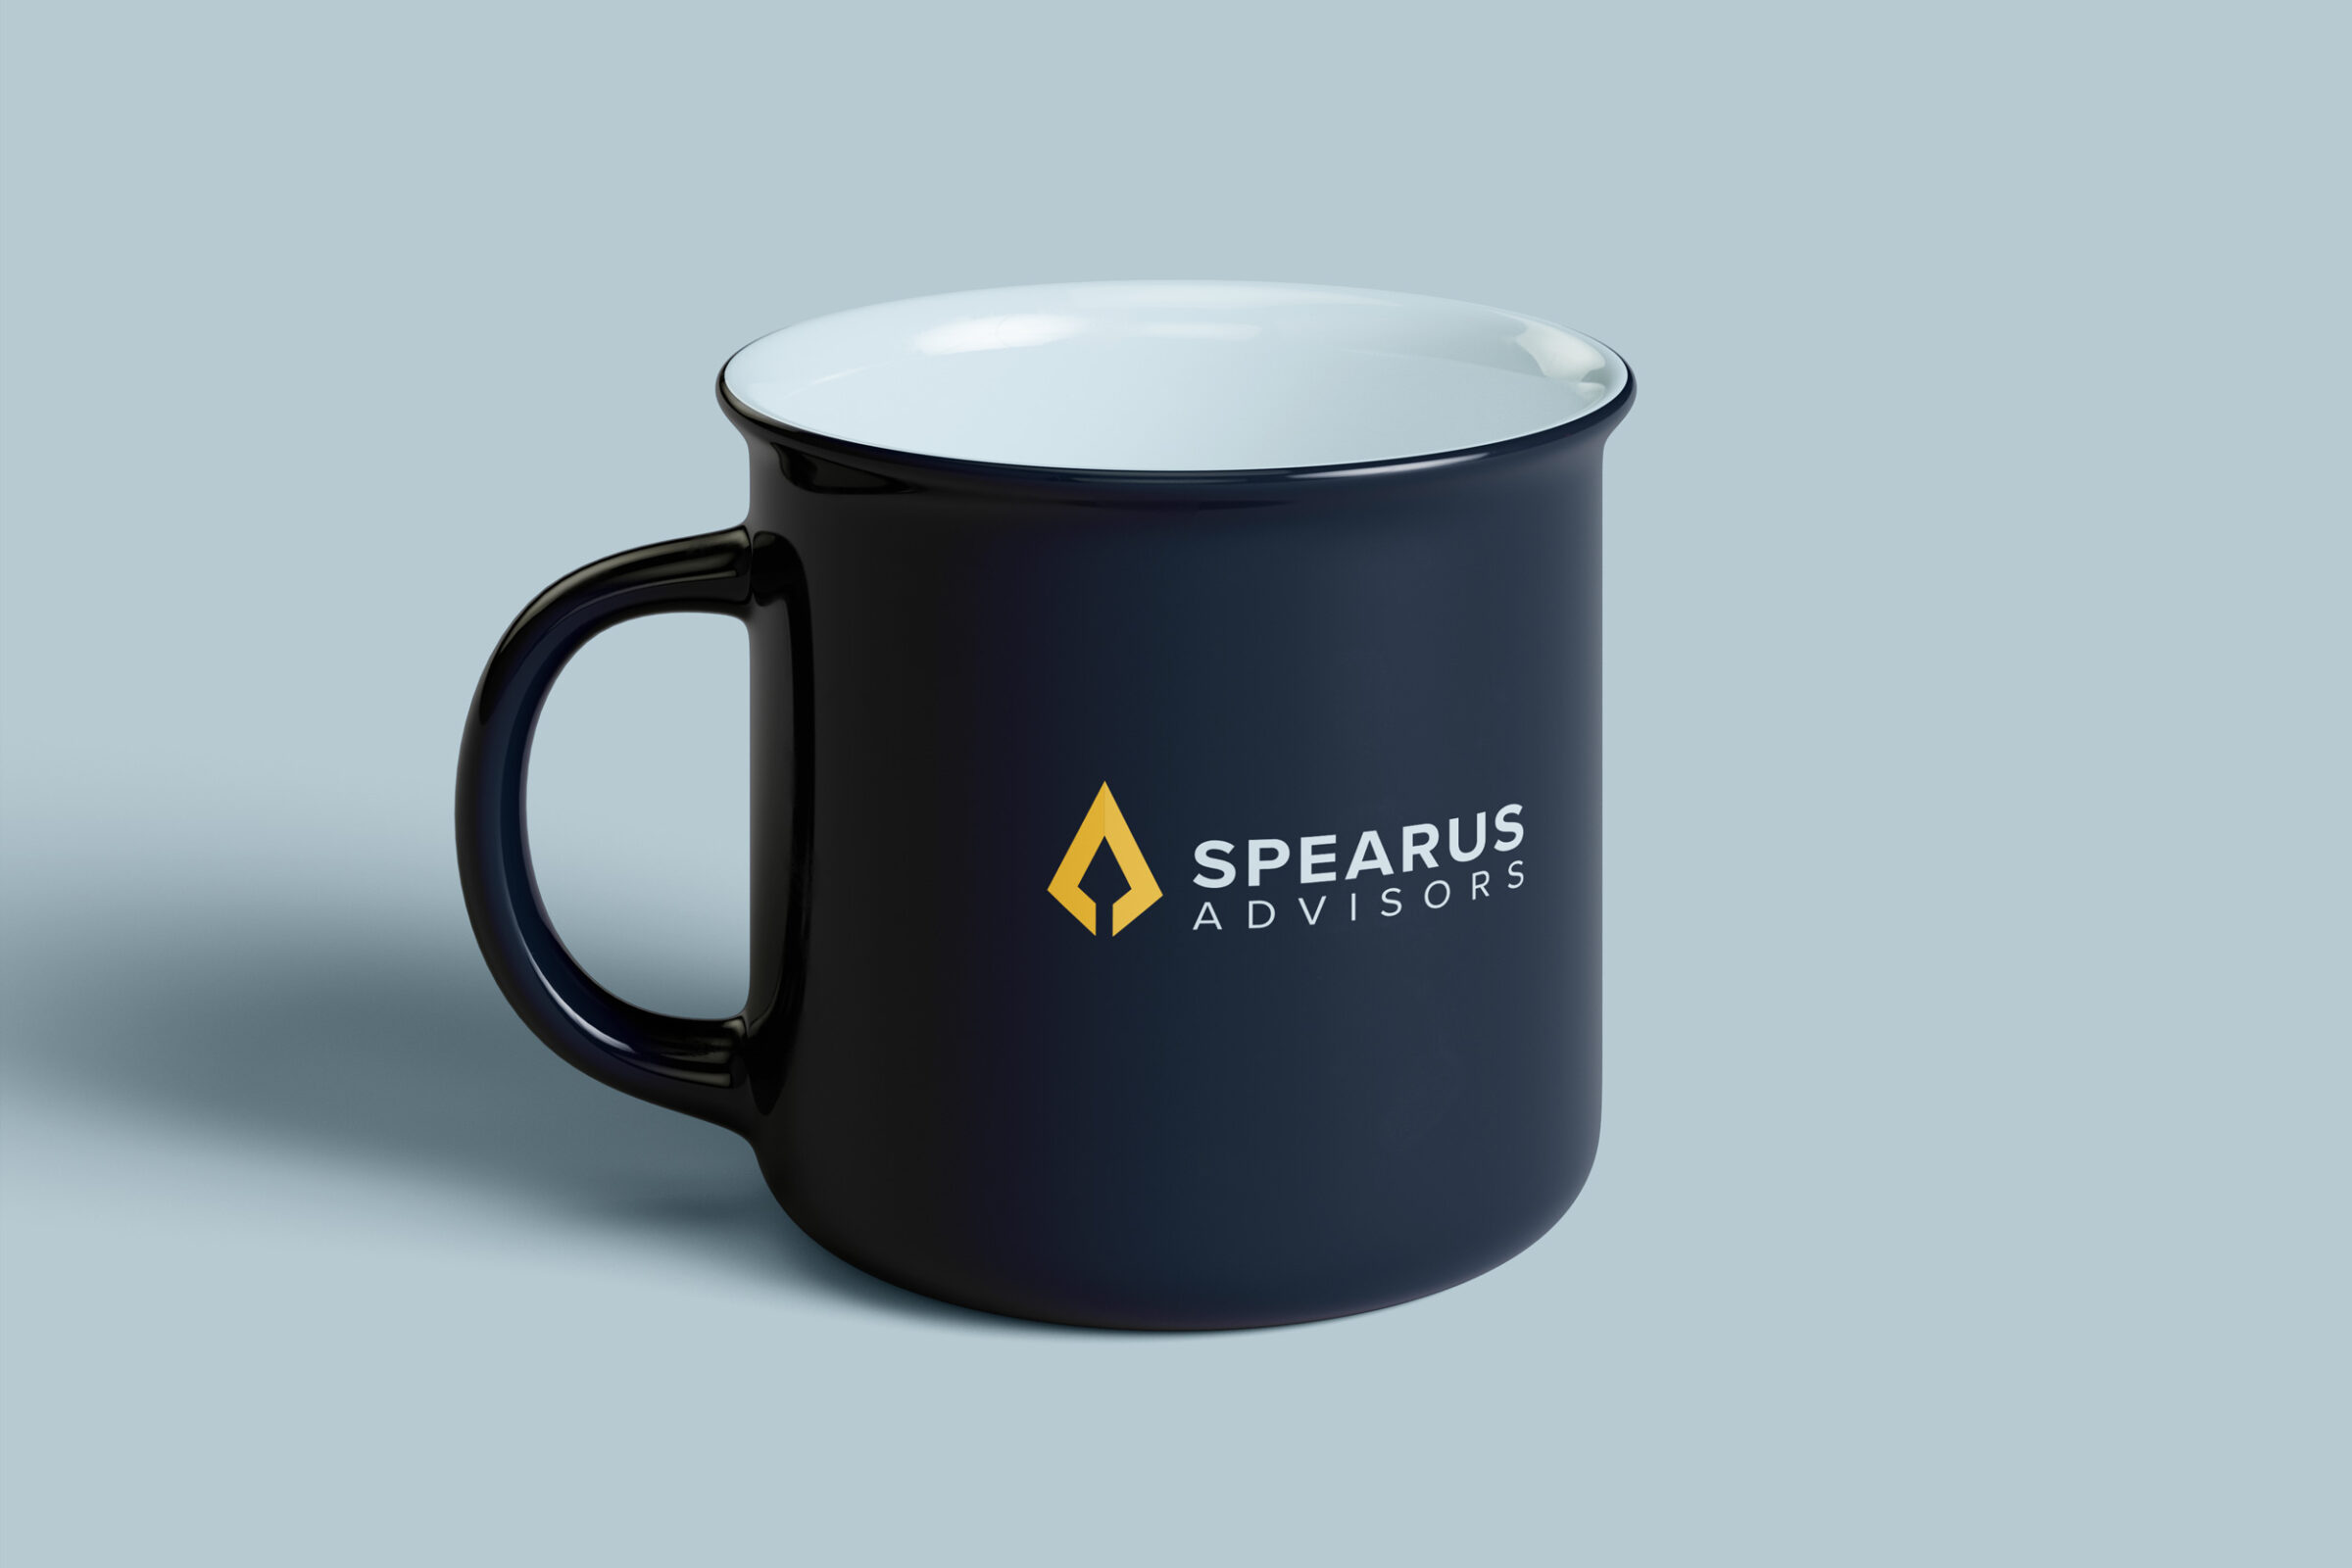 Spearus logo on a coffee mug